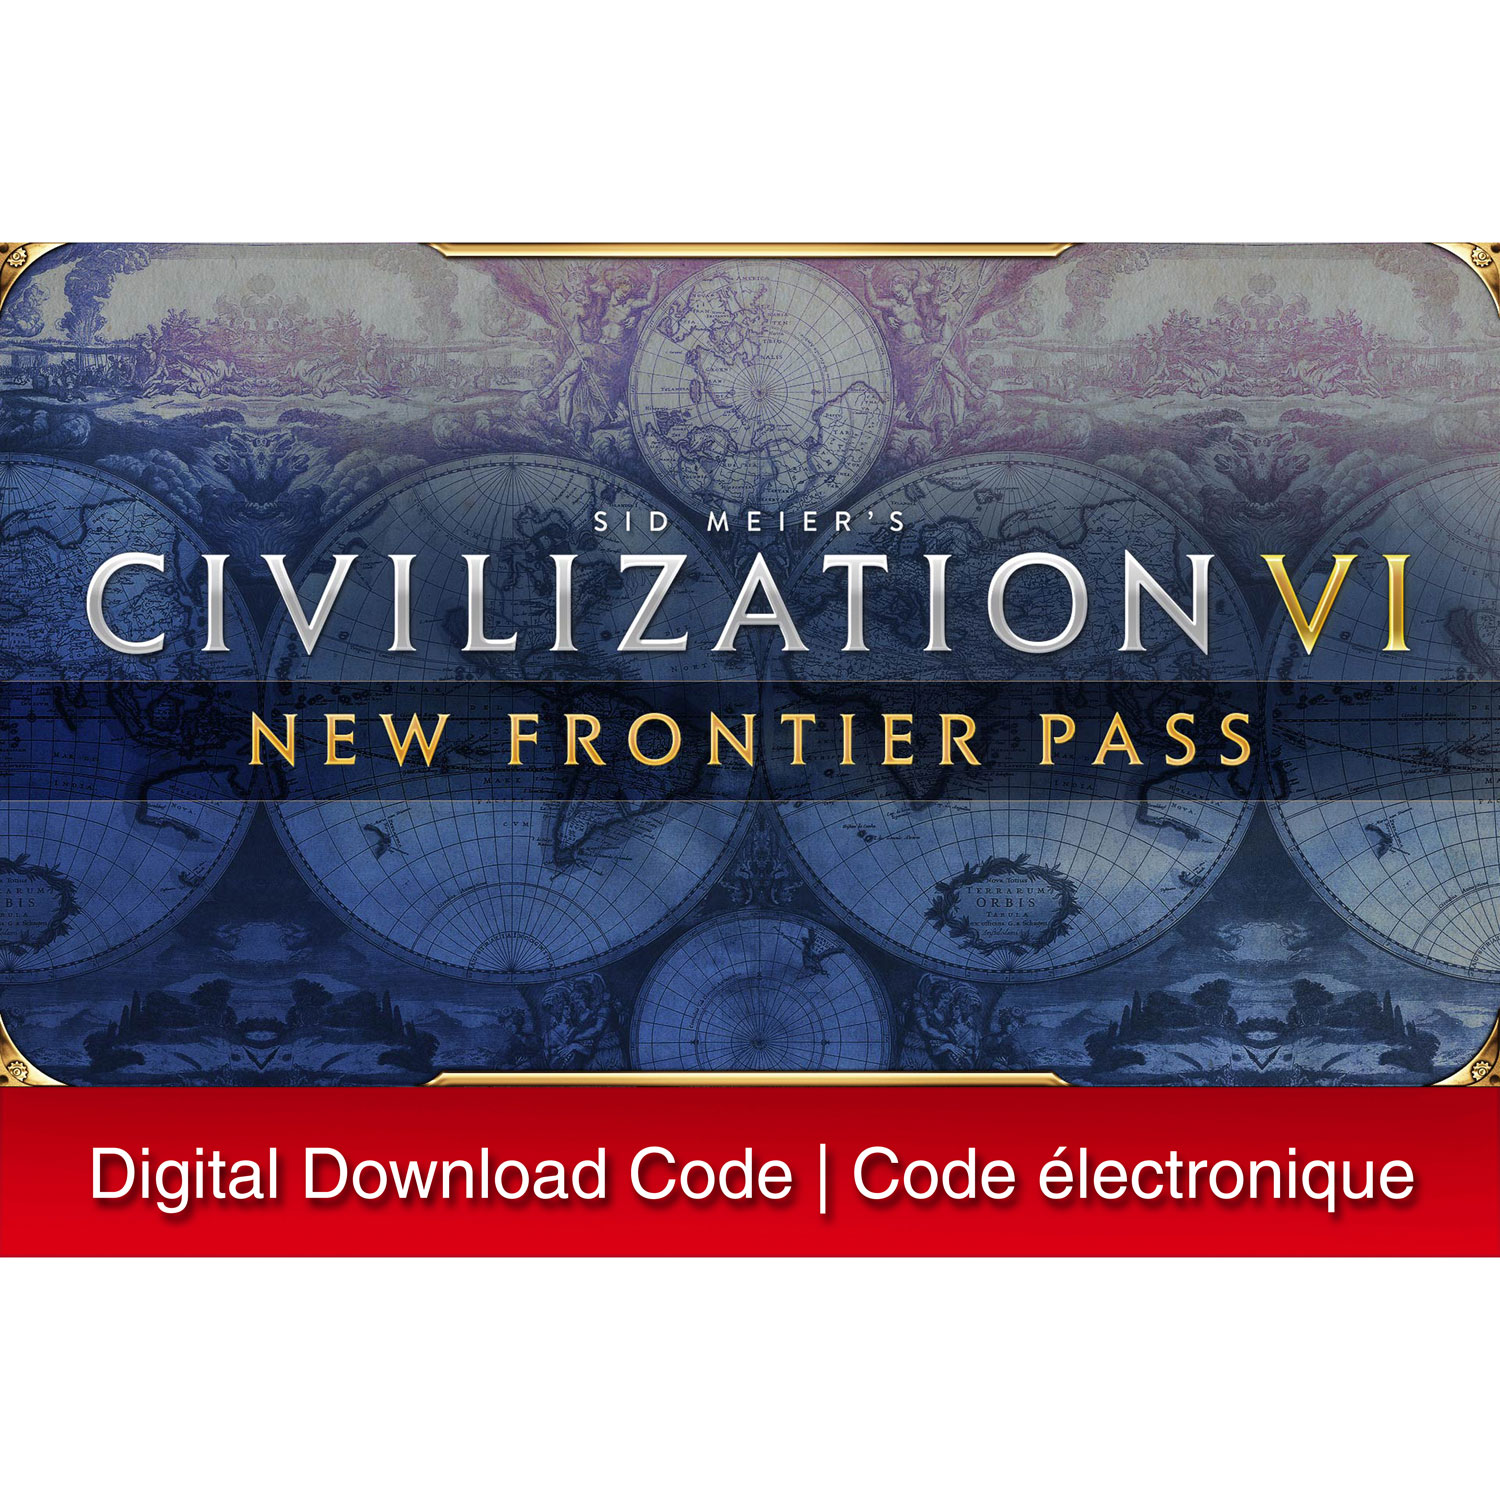 Sid Meier's Civilization VI: New Frontier Pass (Switch) - Digital Download